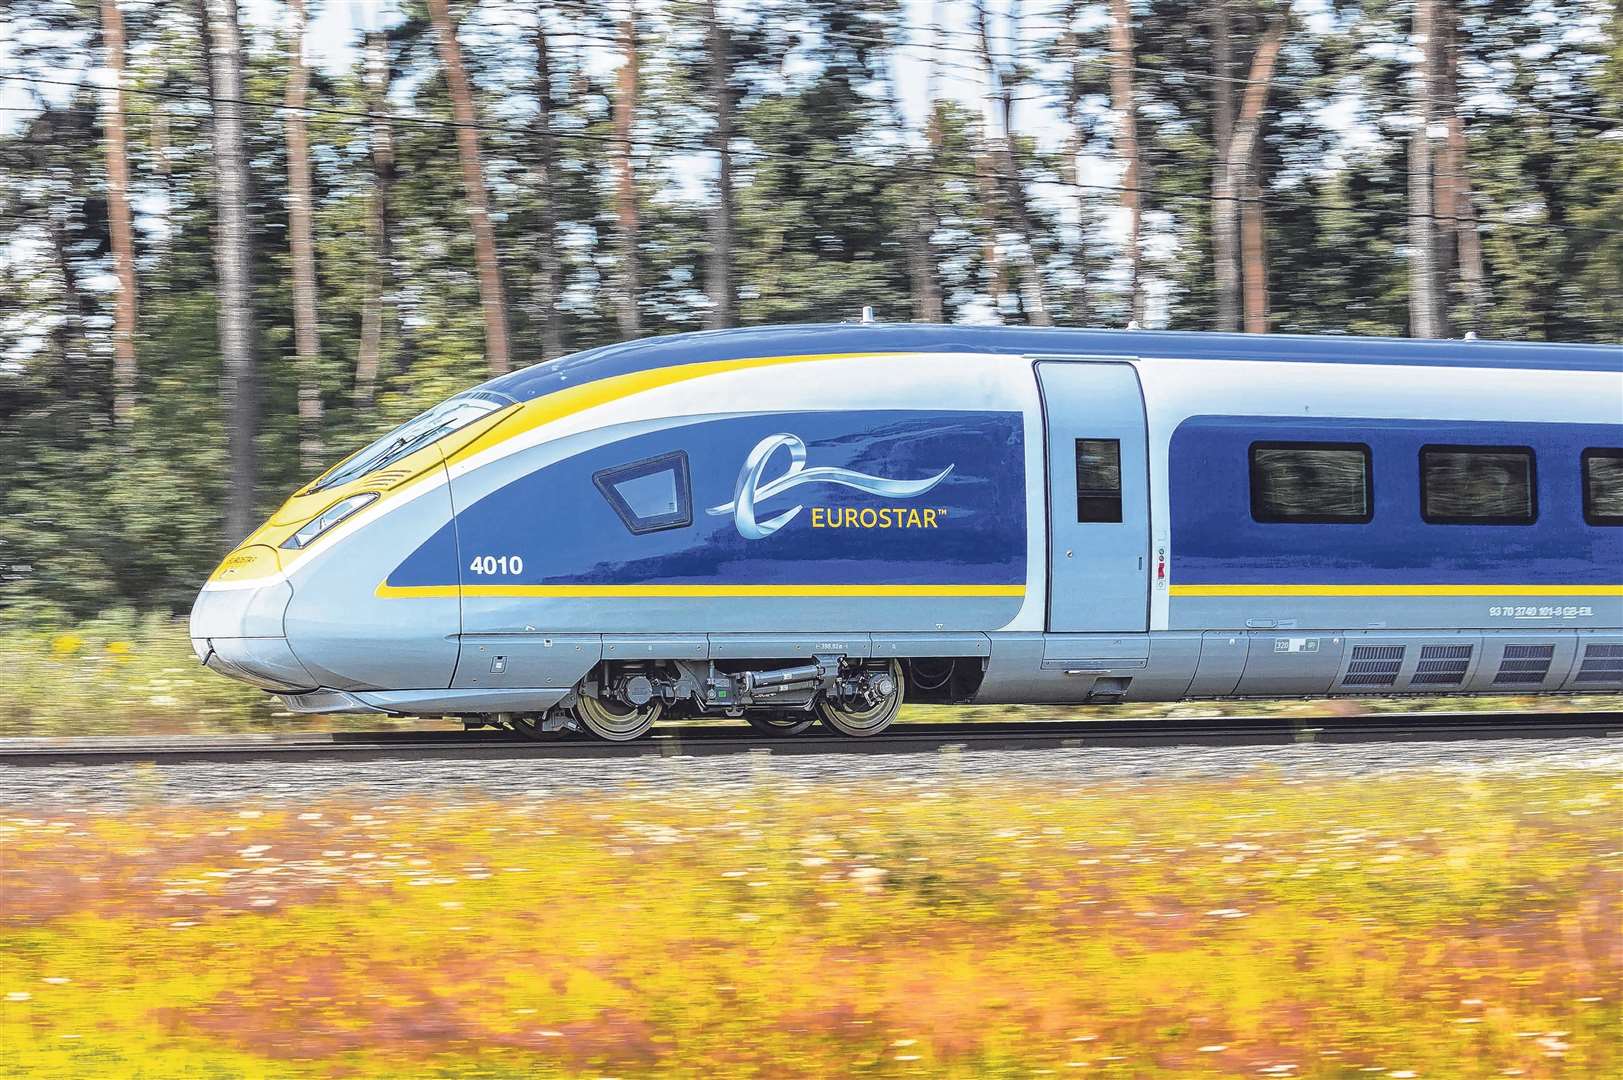 A Eurostar train. Library image.